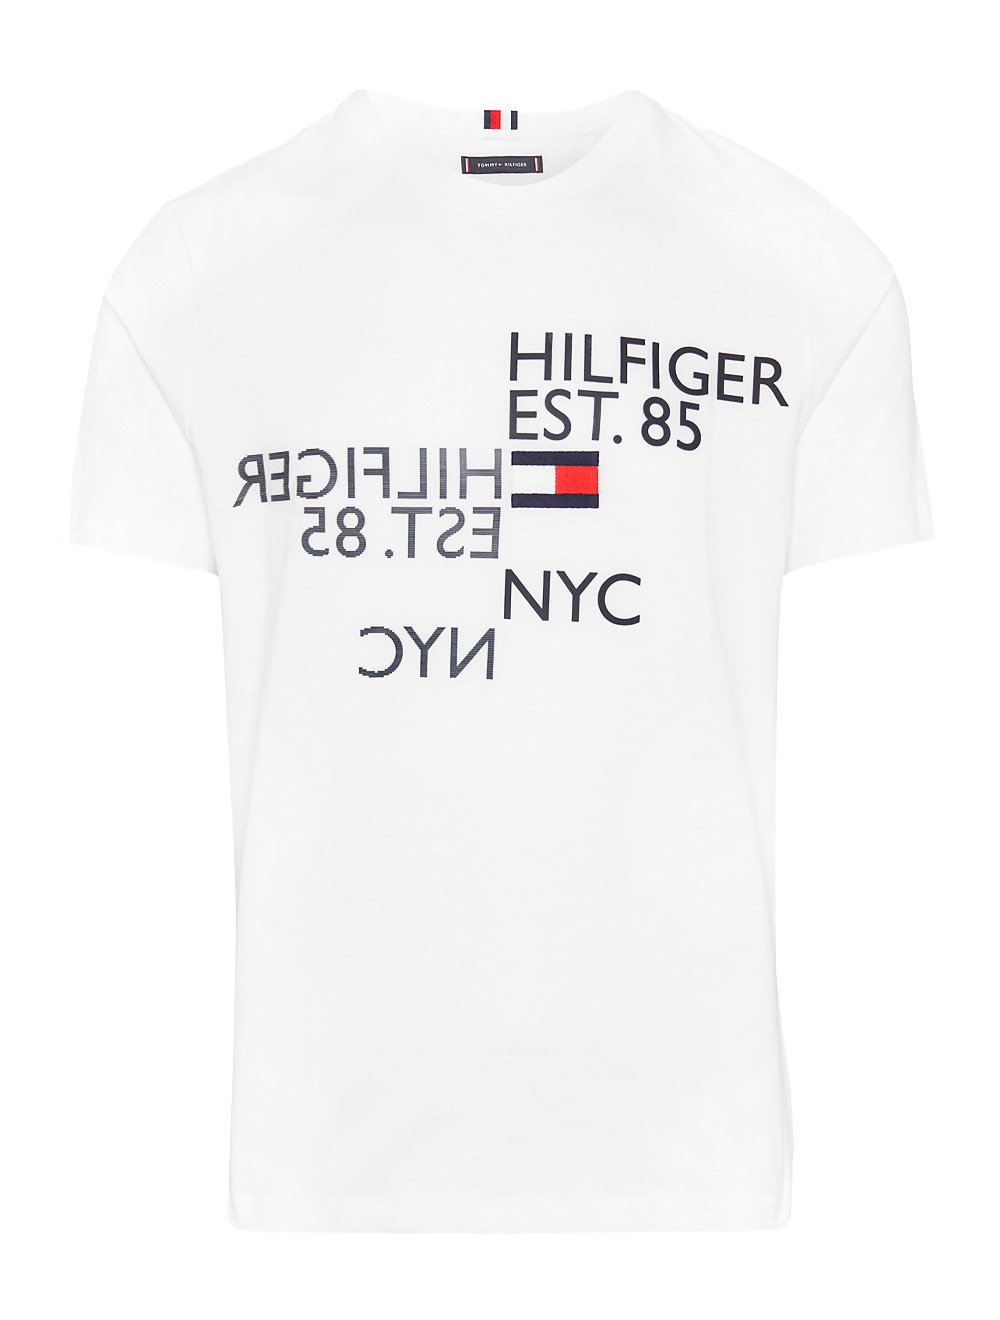 Camiseta Tommy Hilfiger Mirrored Graphic Tee Branca